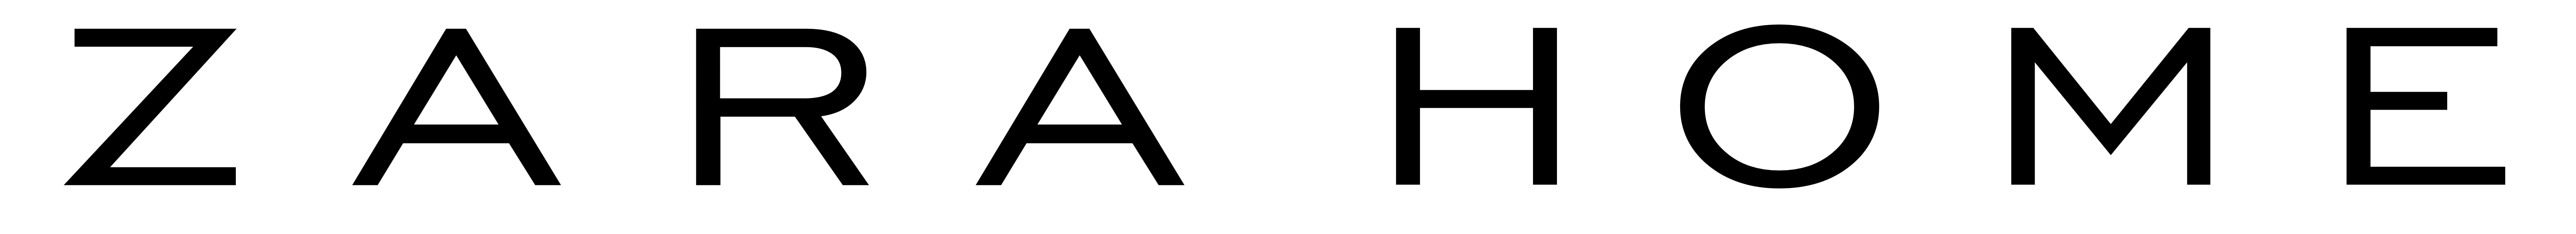 Zara logo Gambar Transparan